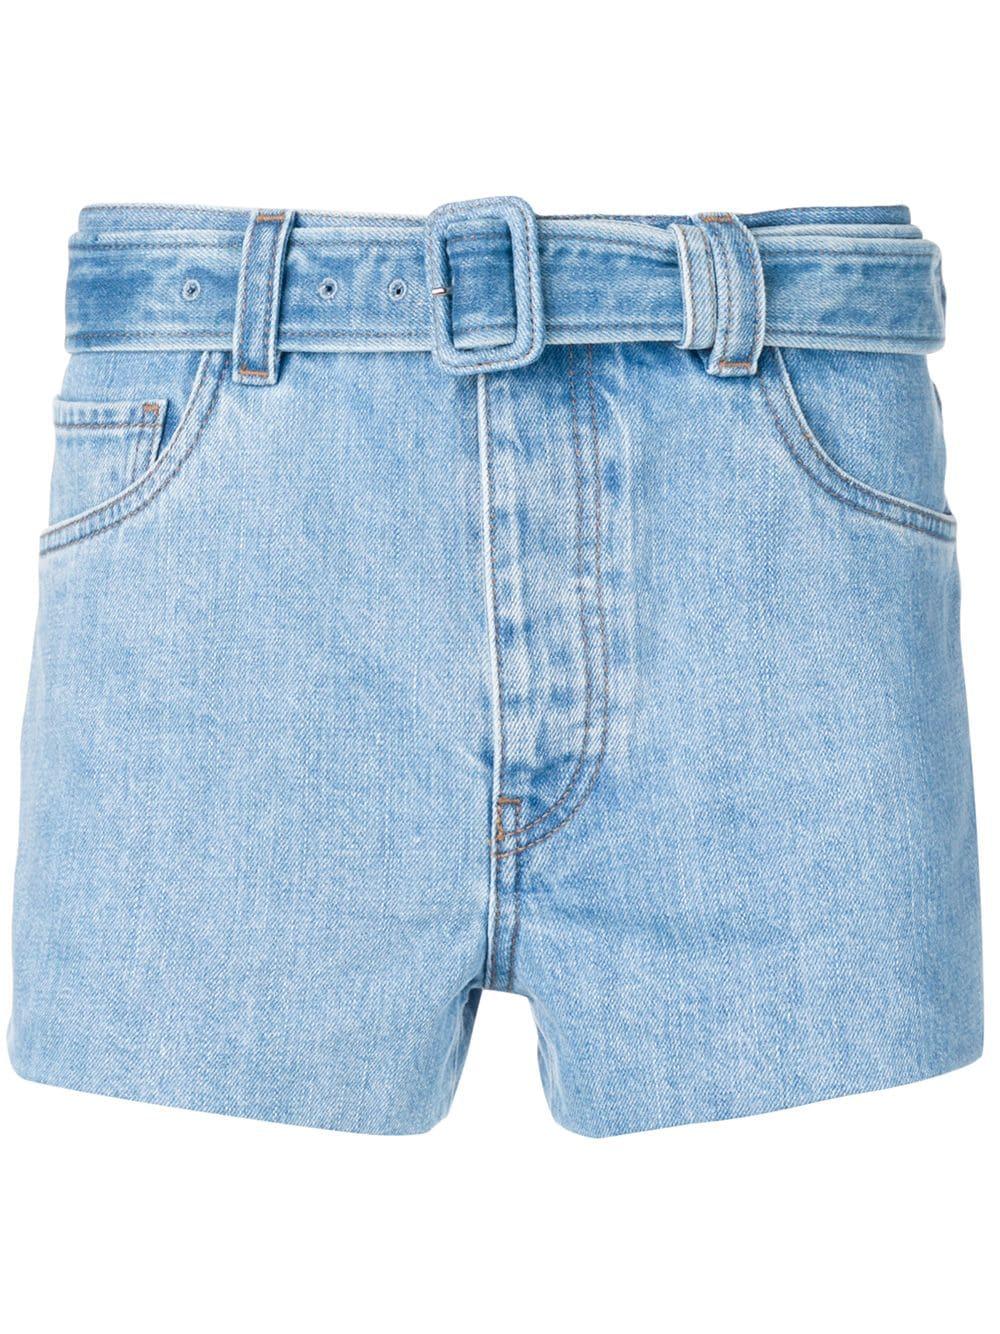 Prada Belted Denim Shorts in Blue for Men - Lyst